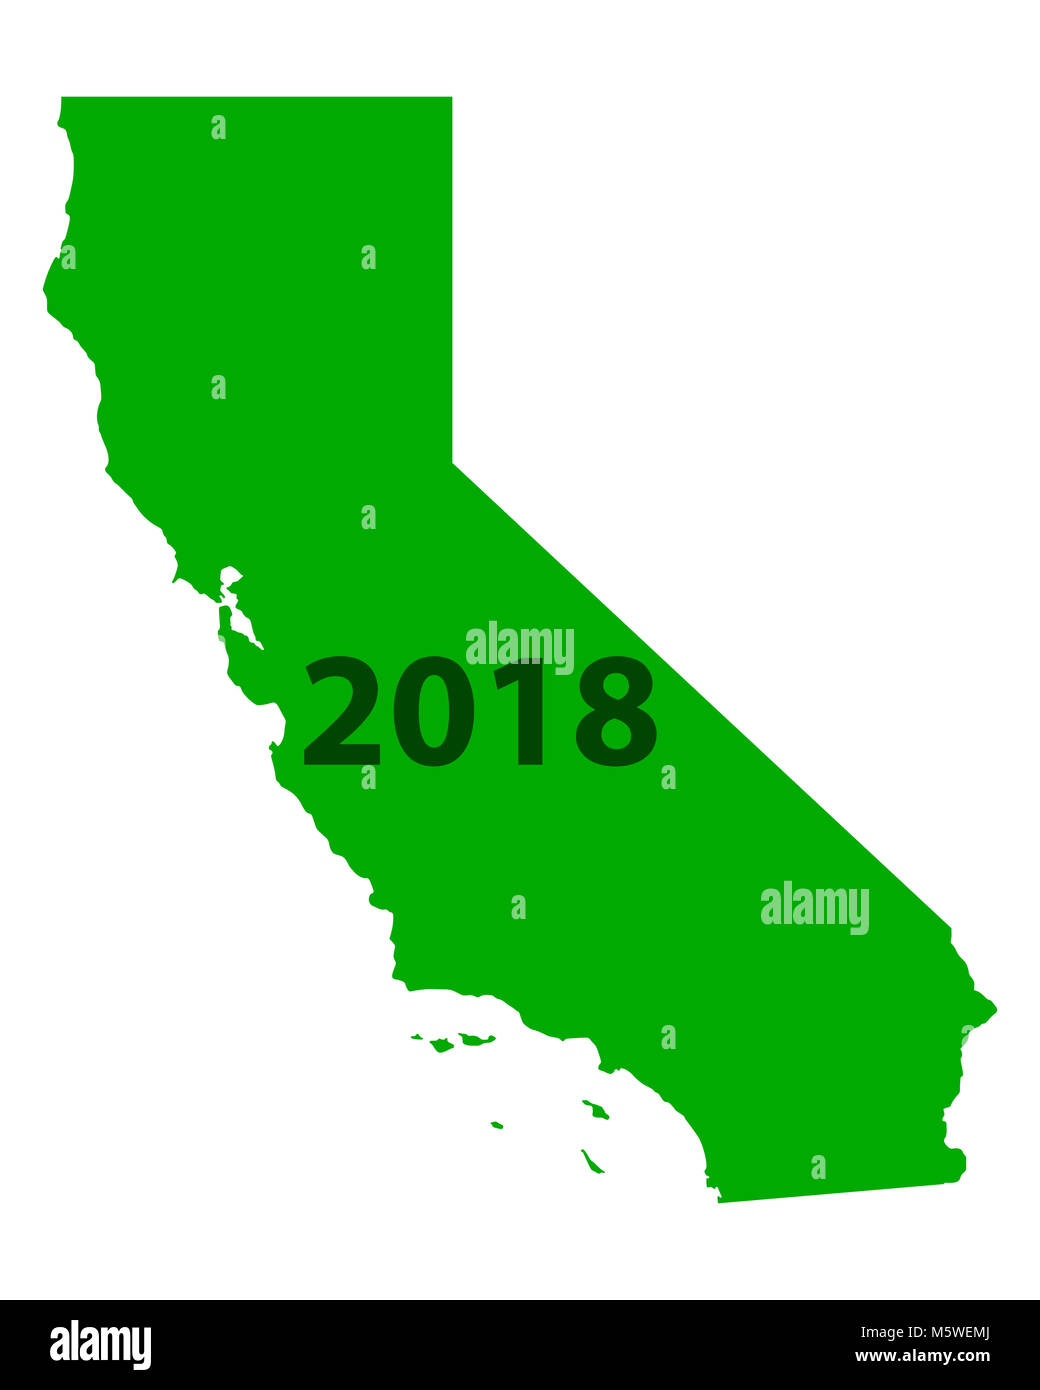 Map Of California 2018 M5WEMJ 